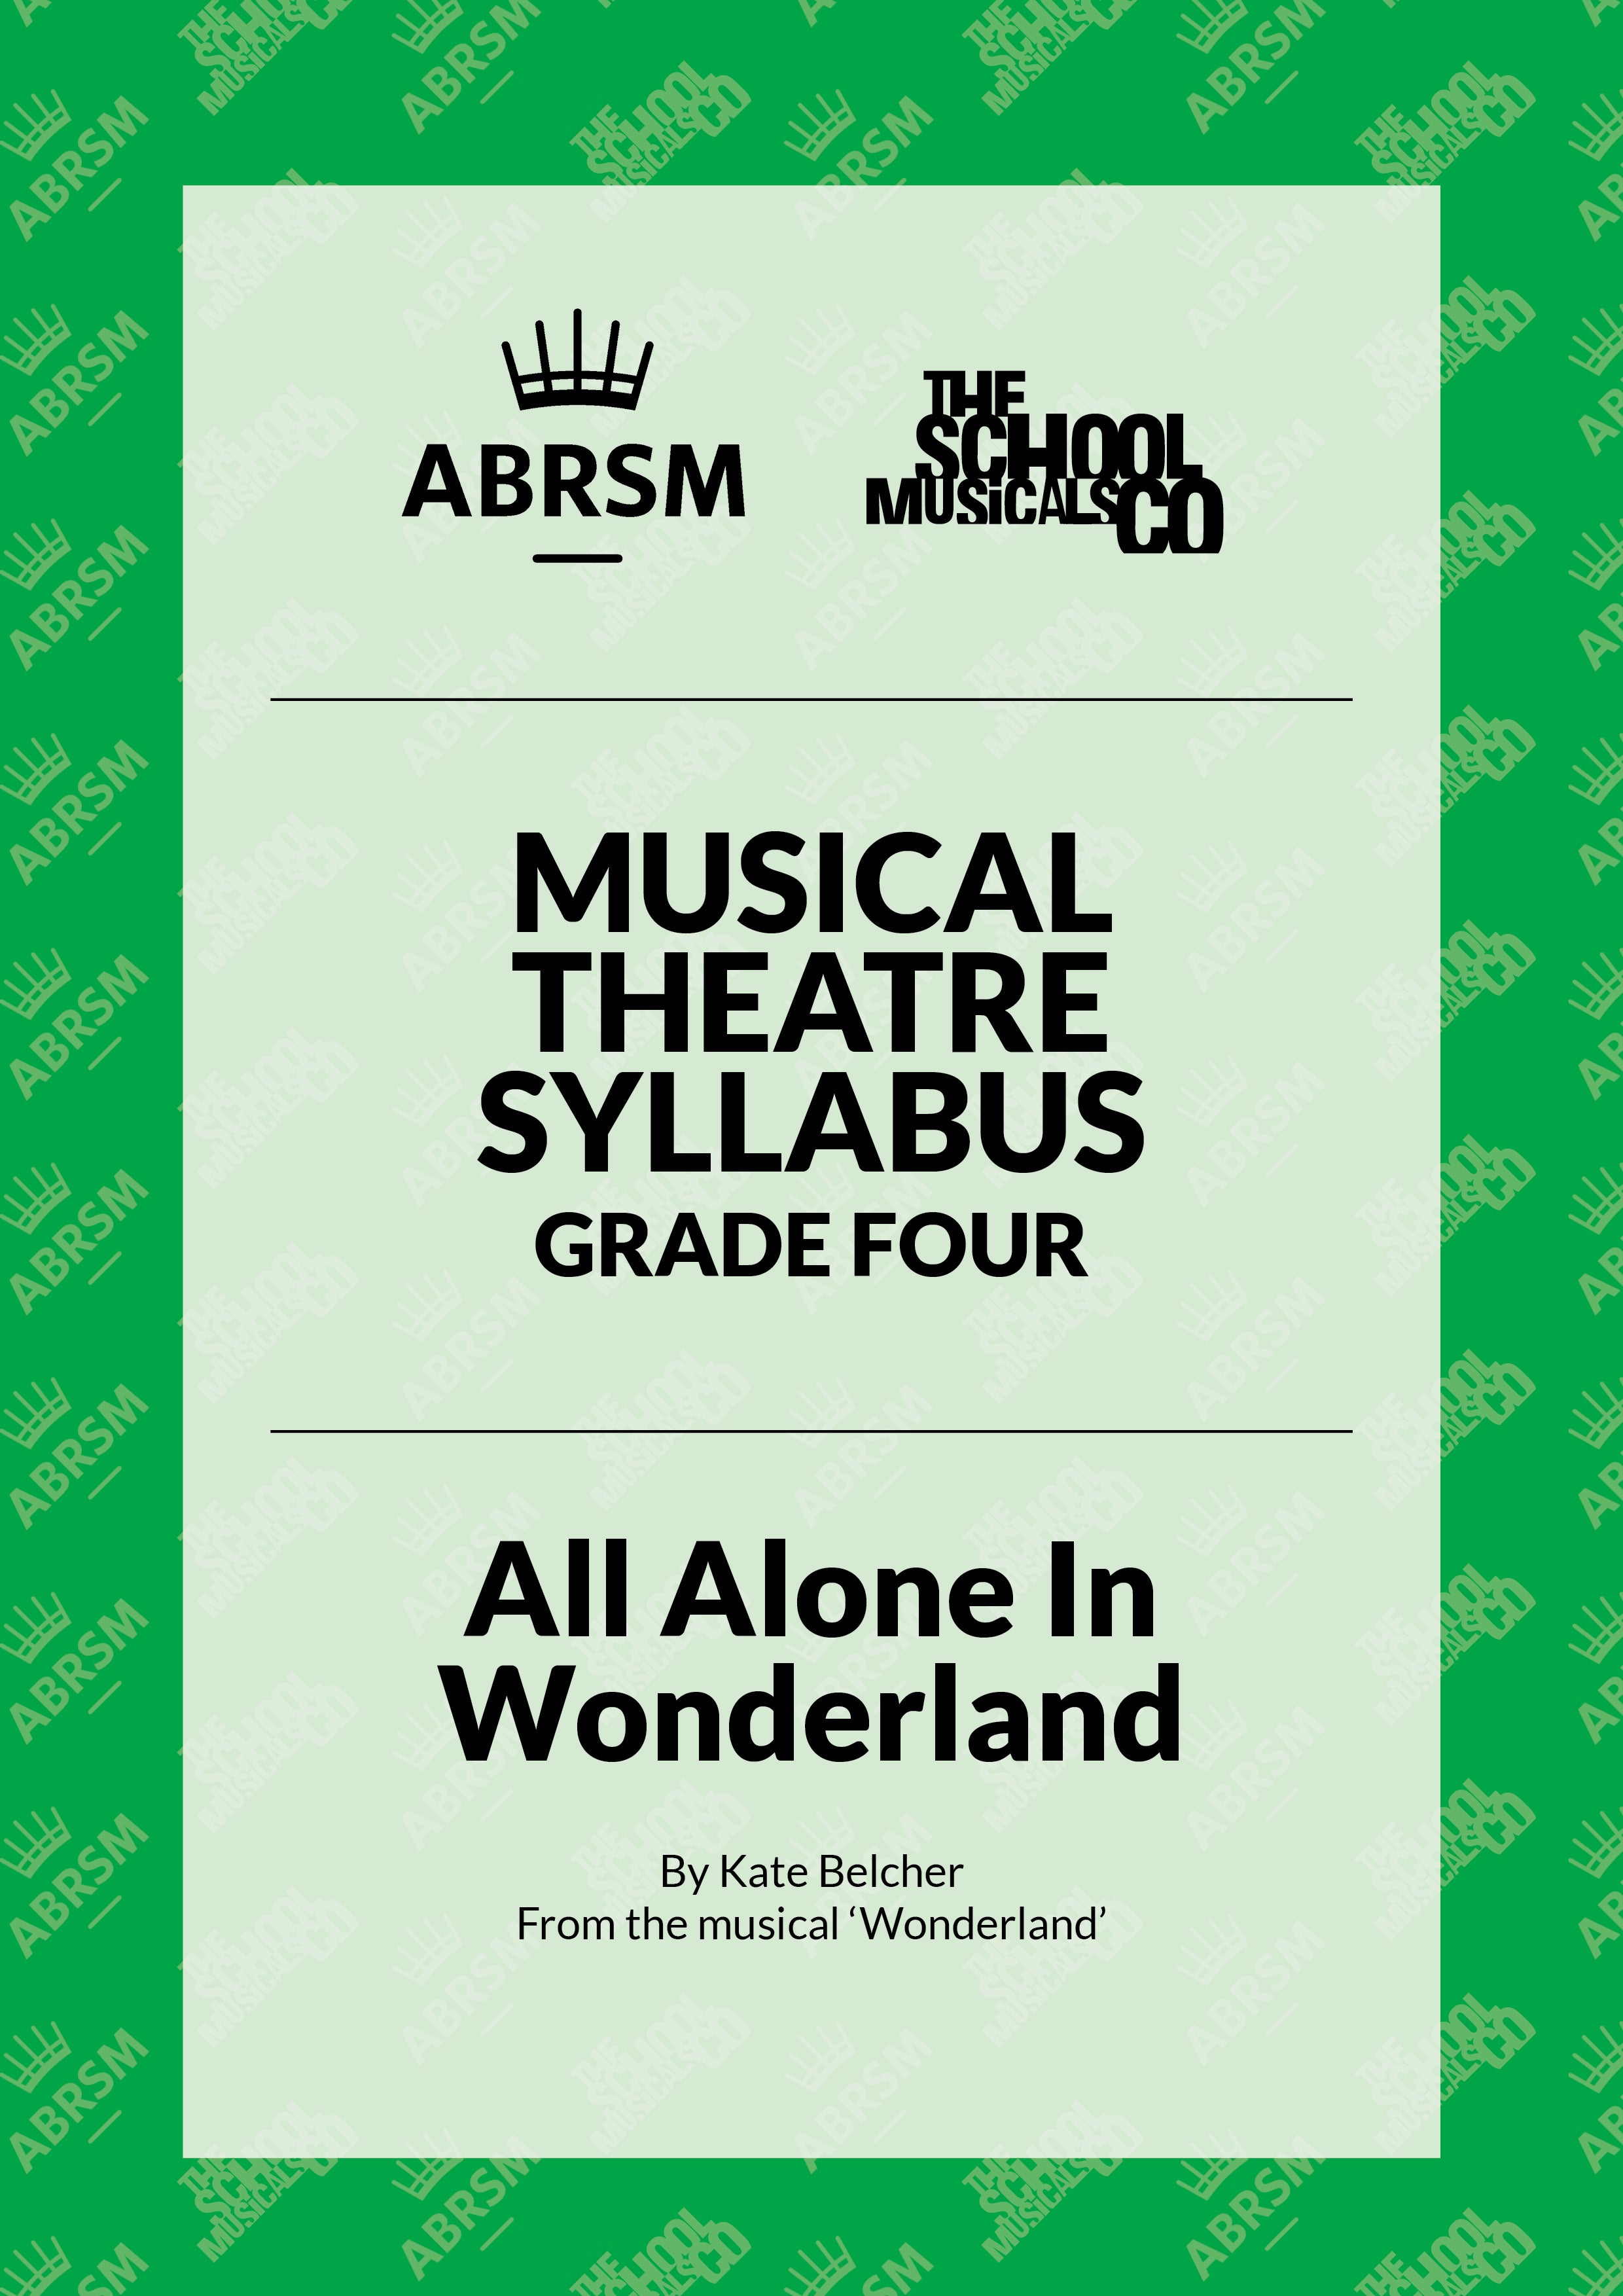 All Alone In Wonderland - ABRSM Musical Theatre Syllabus Grade Four